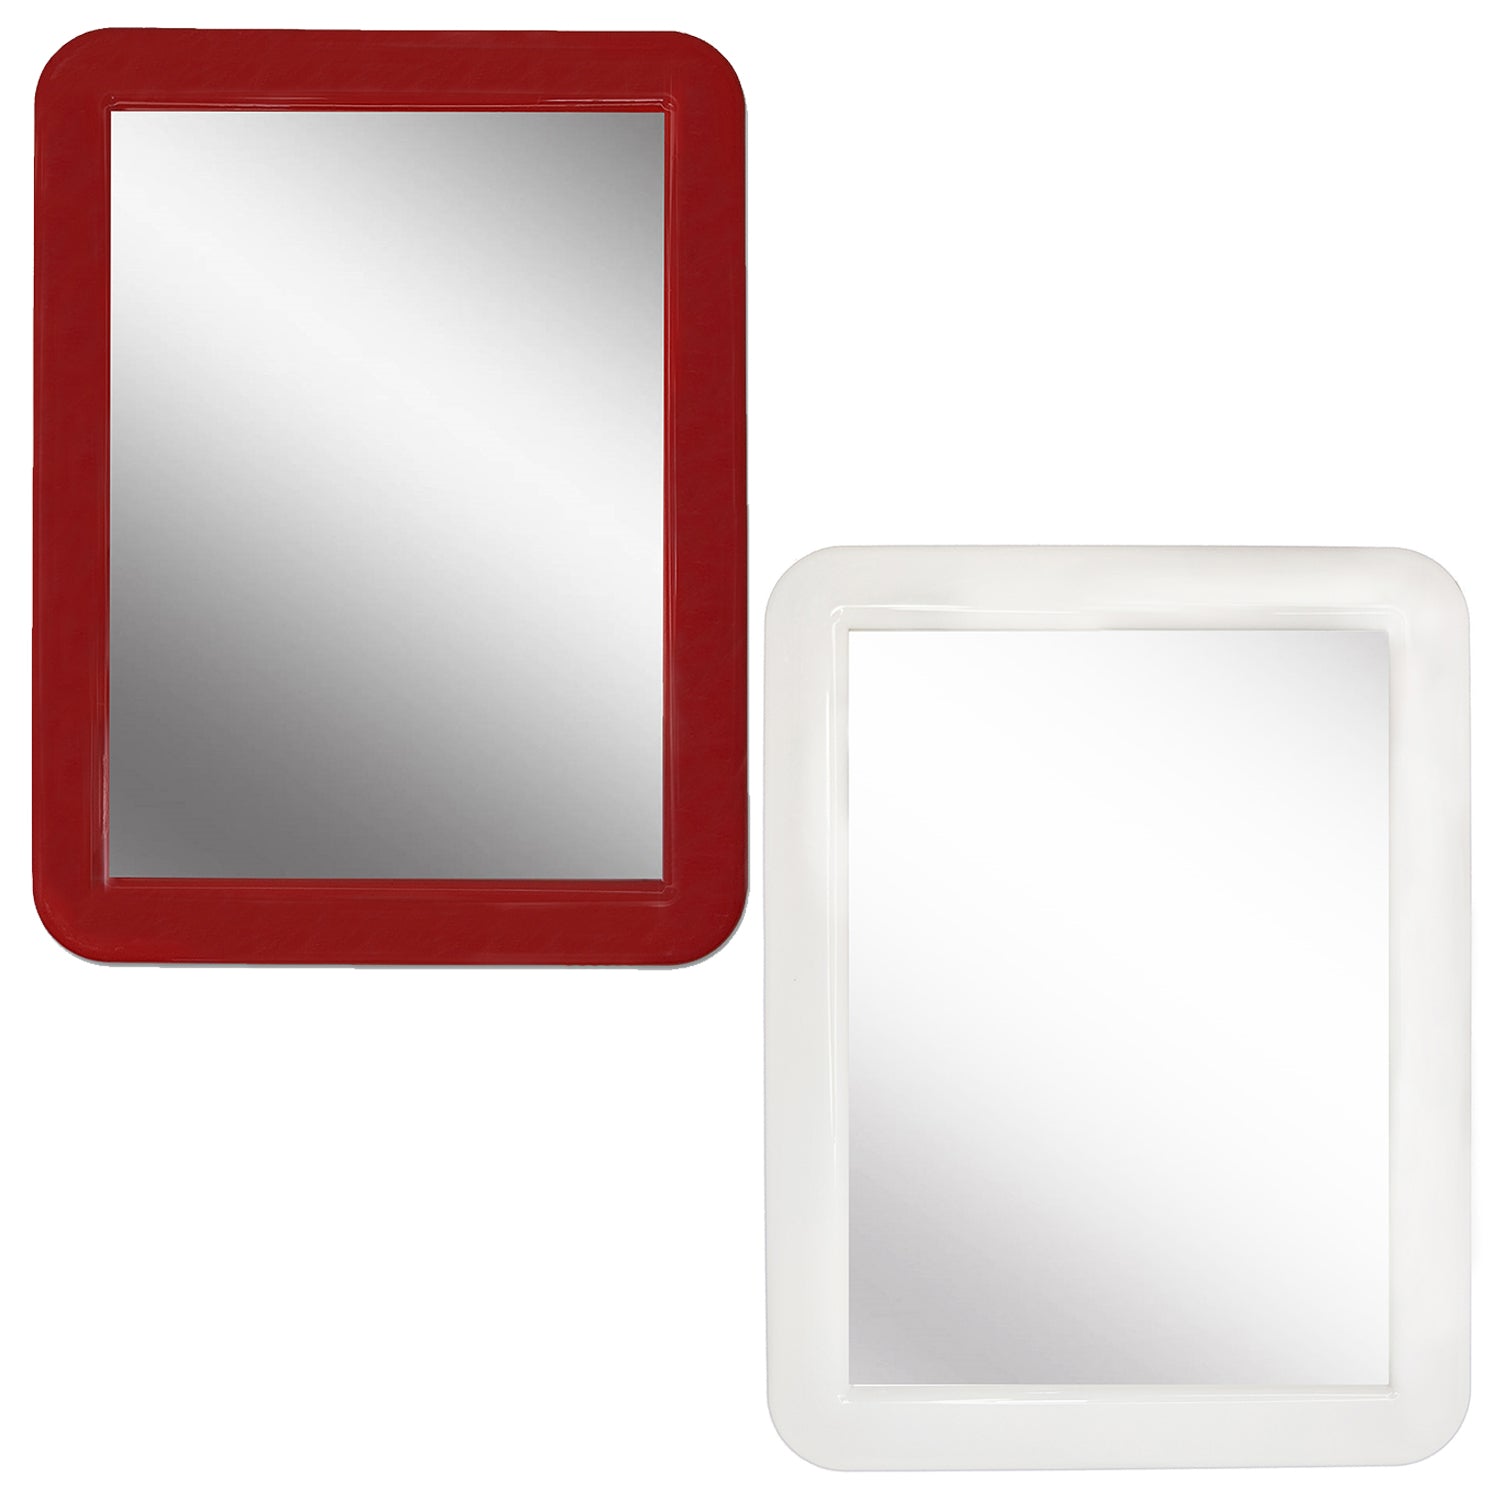 ARTLYMERS MIRR-PK Magnetic Locker Mirror, 5 x 7 Real glass Small